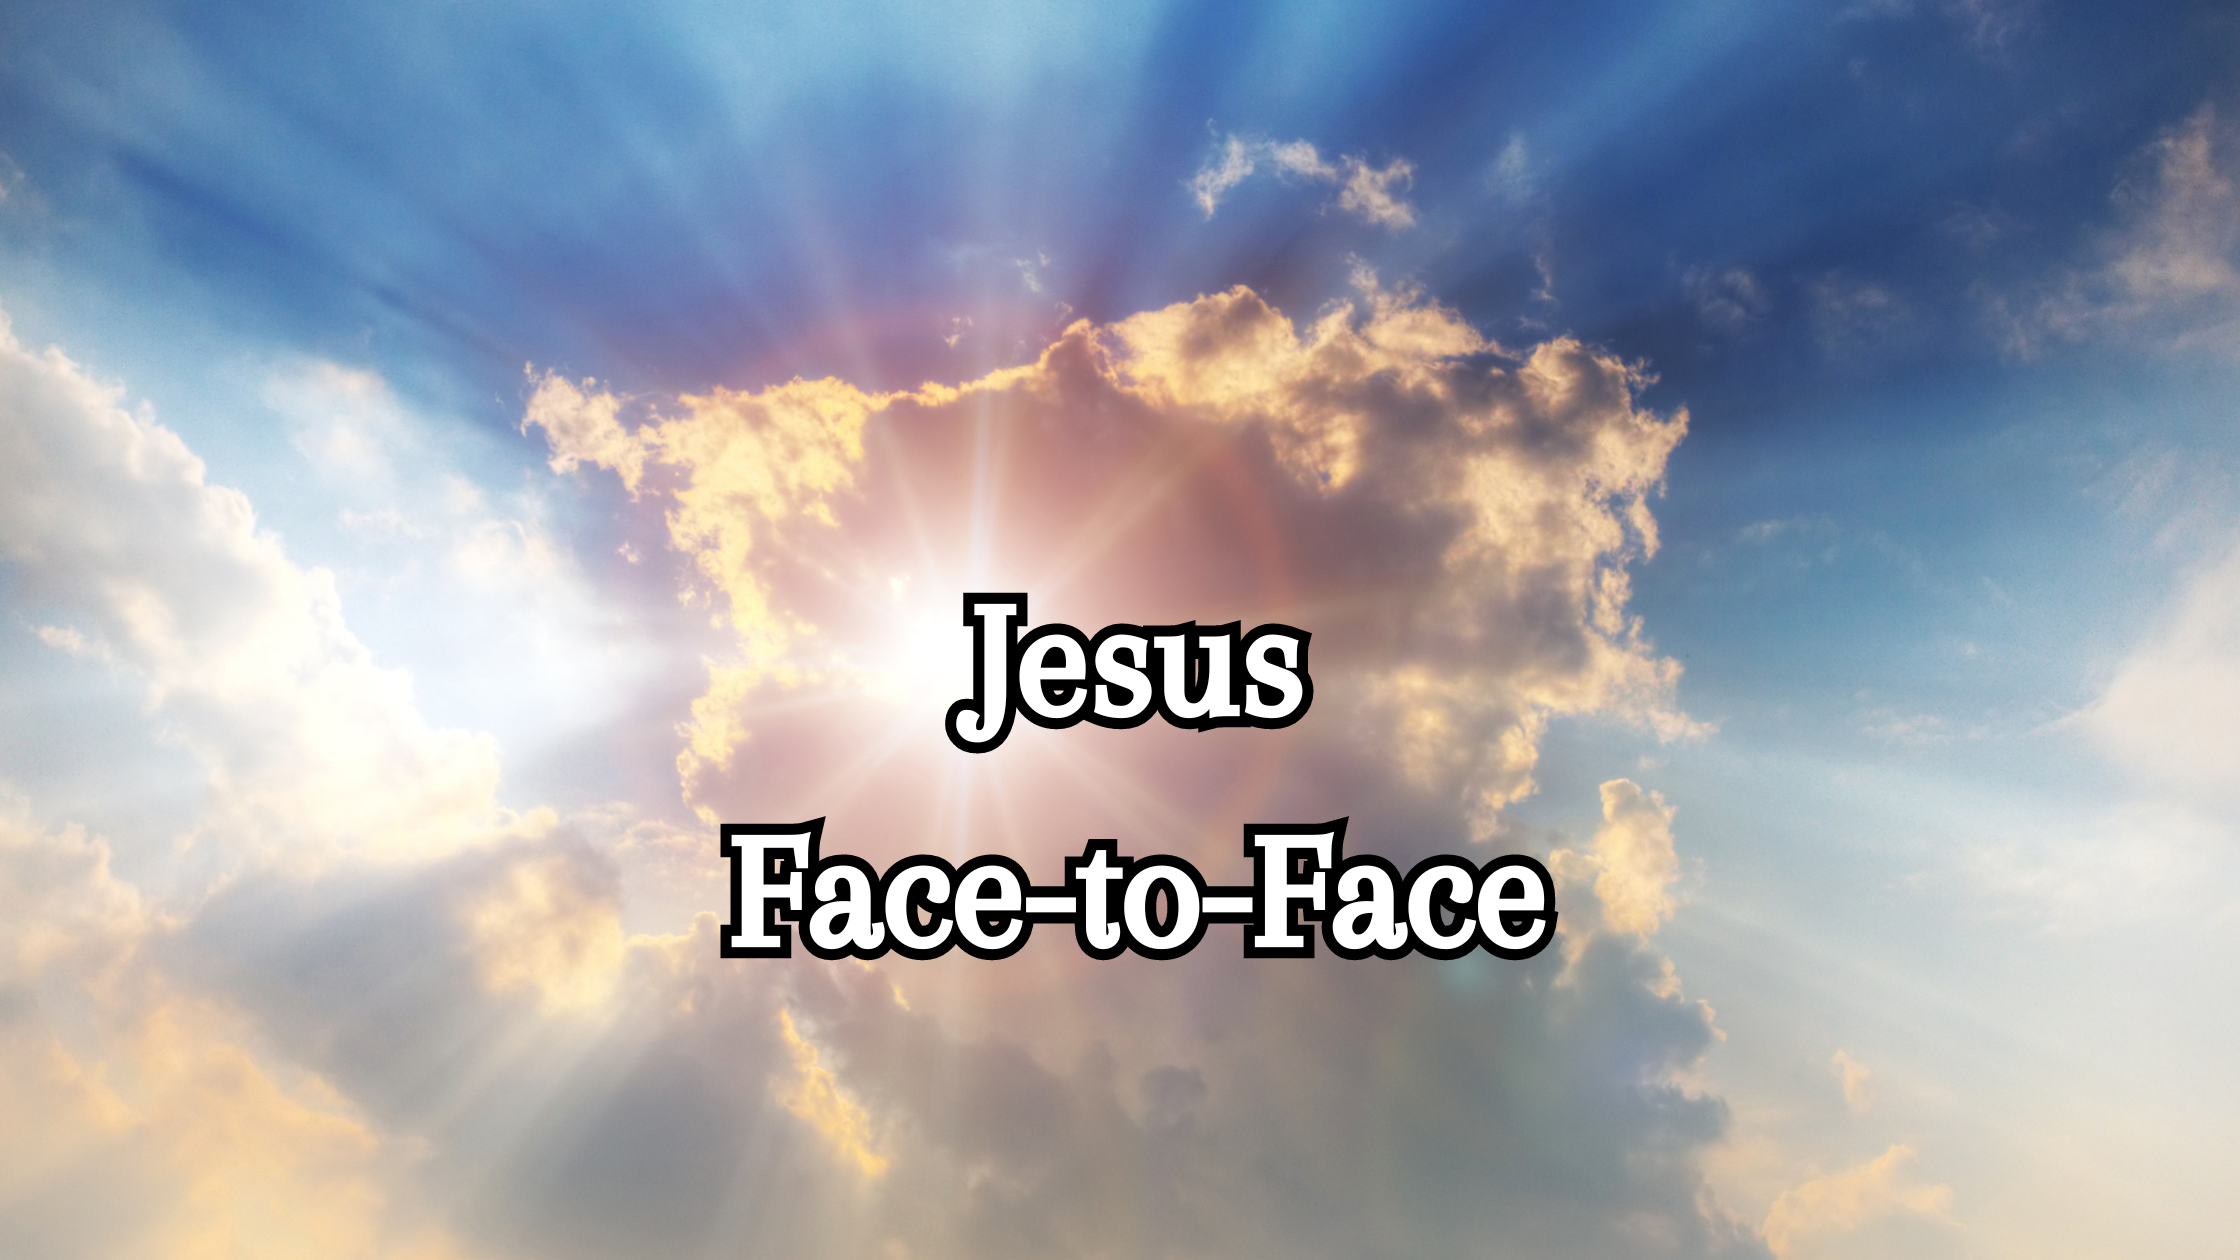 when we see jesus